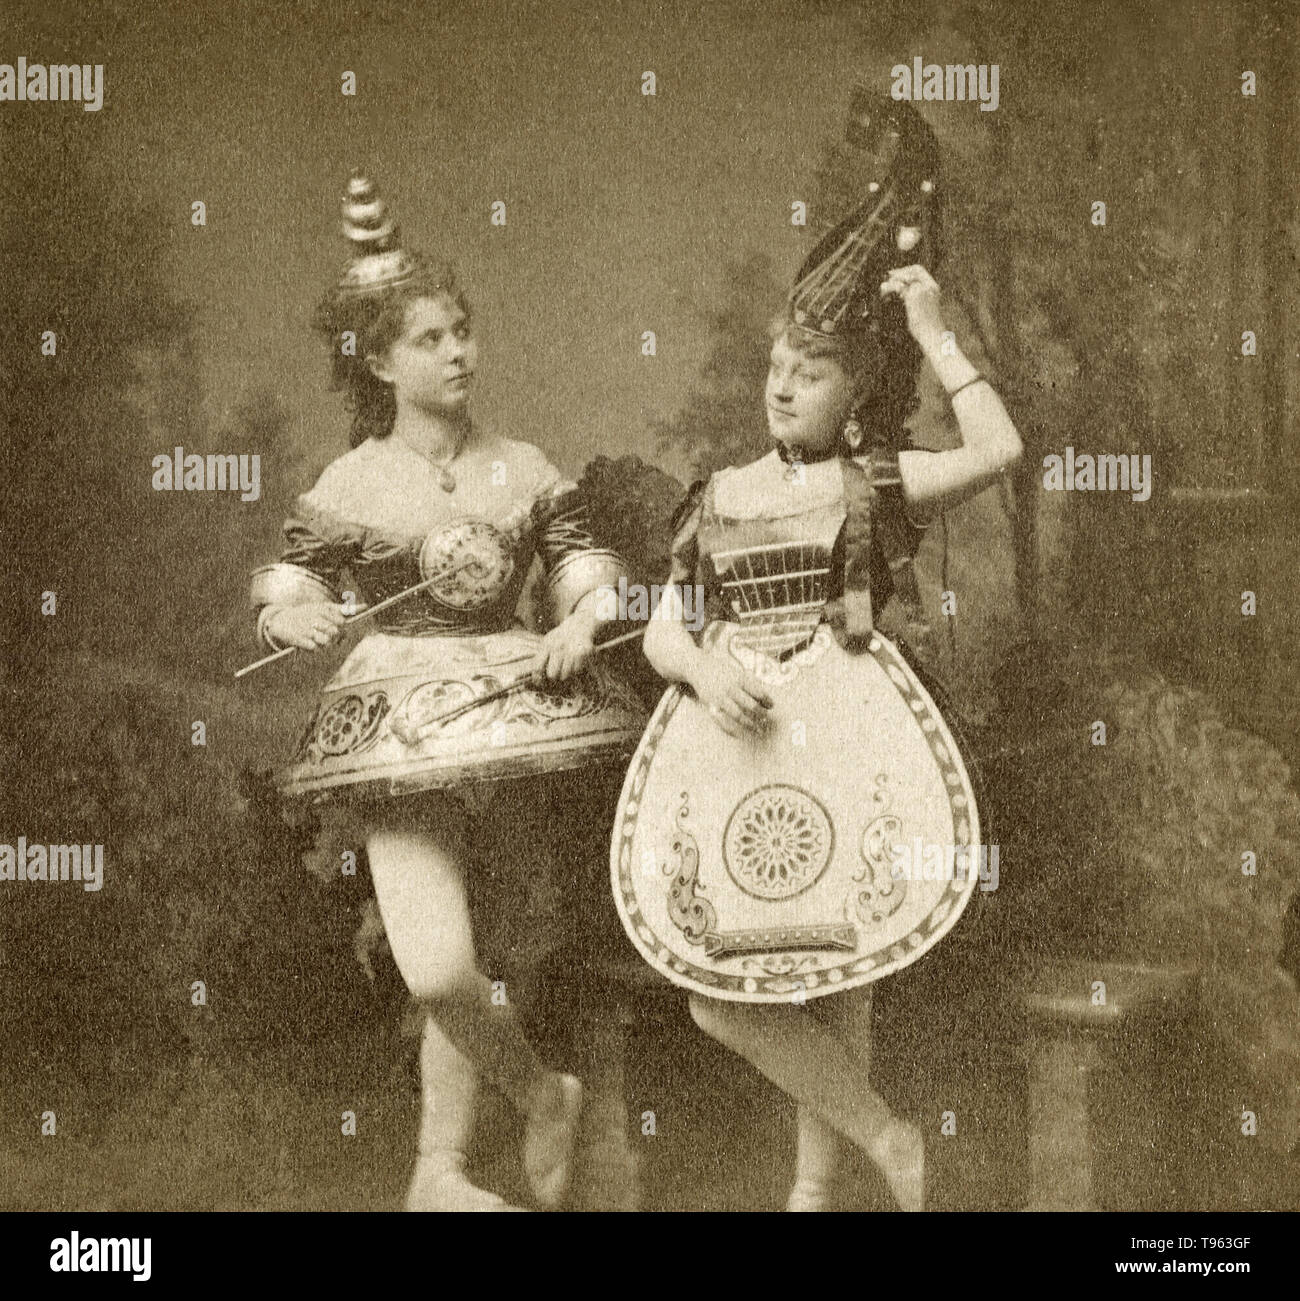 Women dressed in instrument costumes, c. 1865. Albumen silver print. Stock Photo